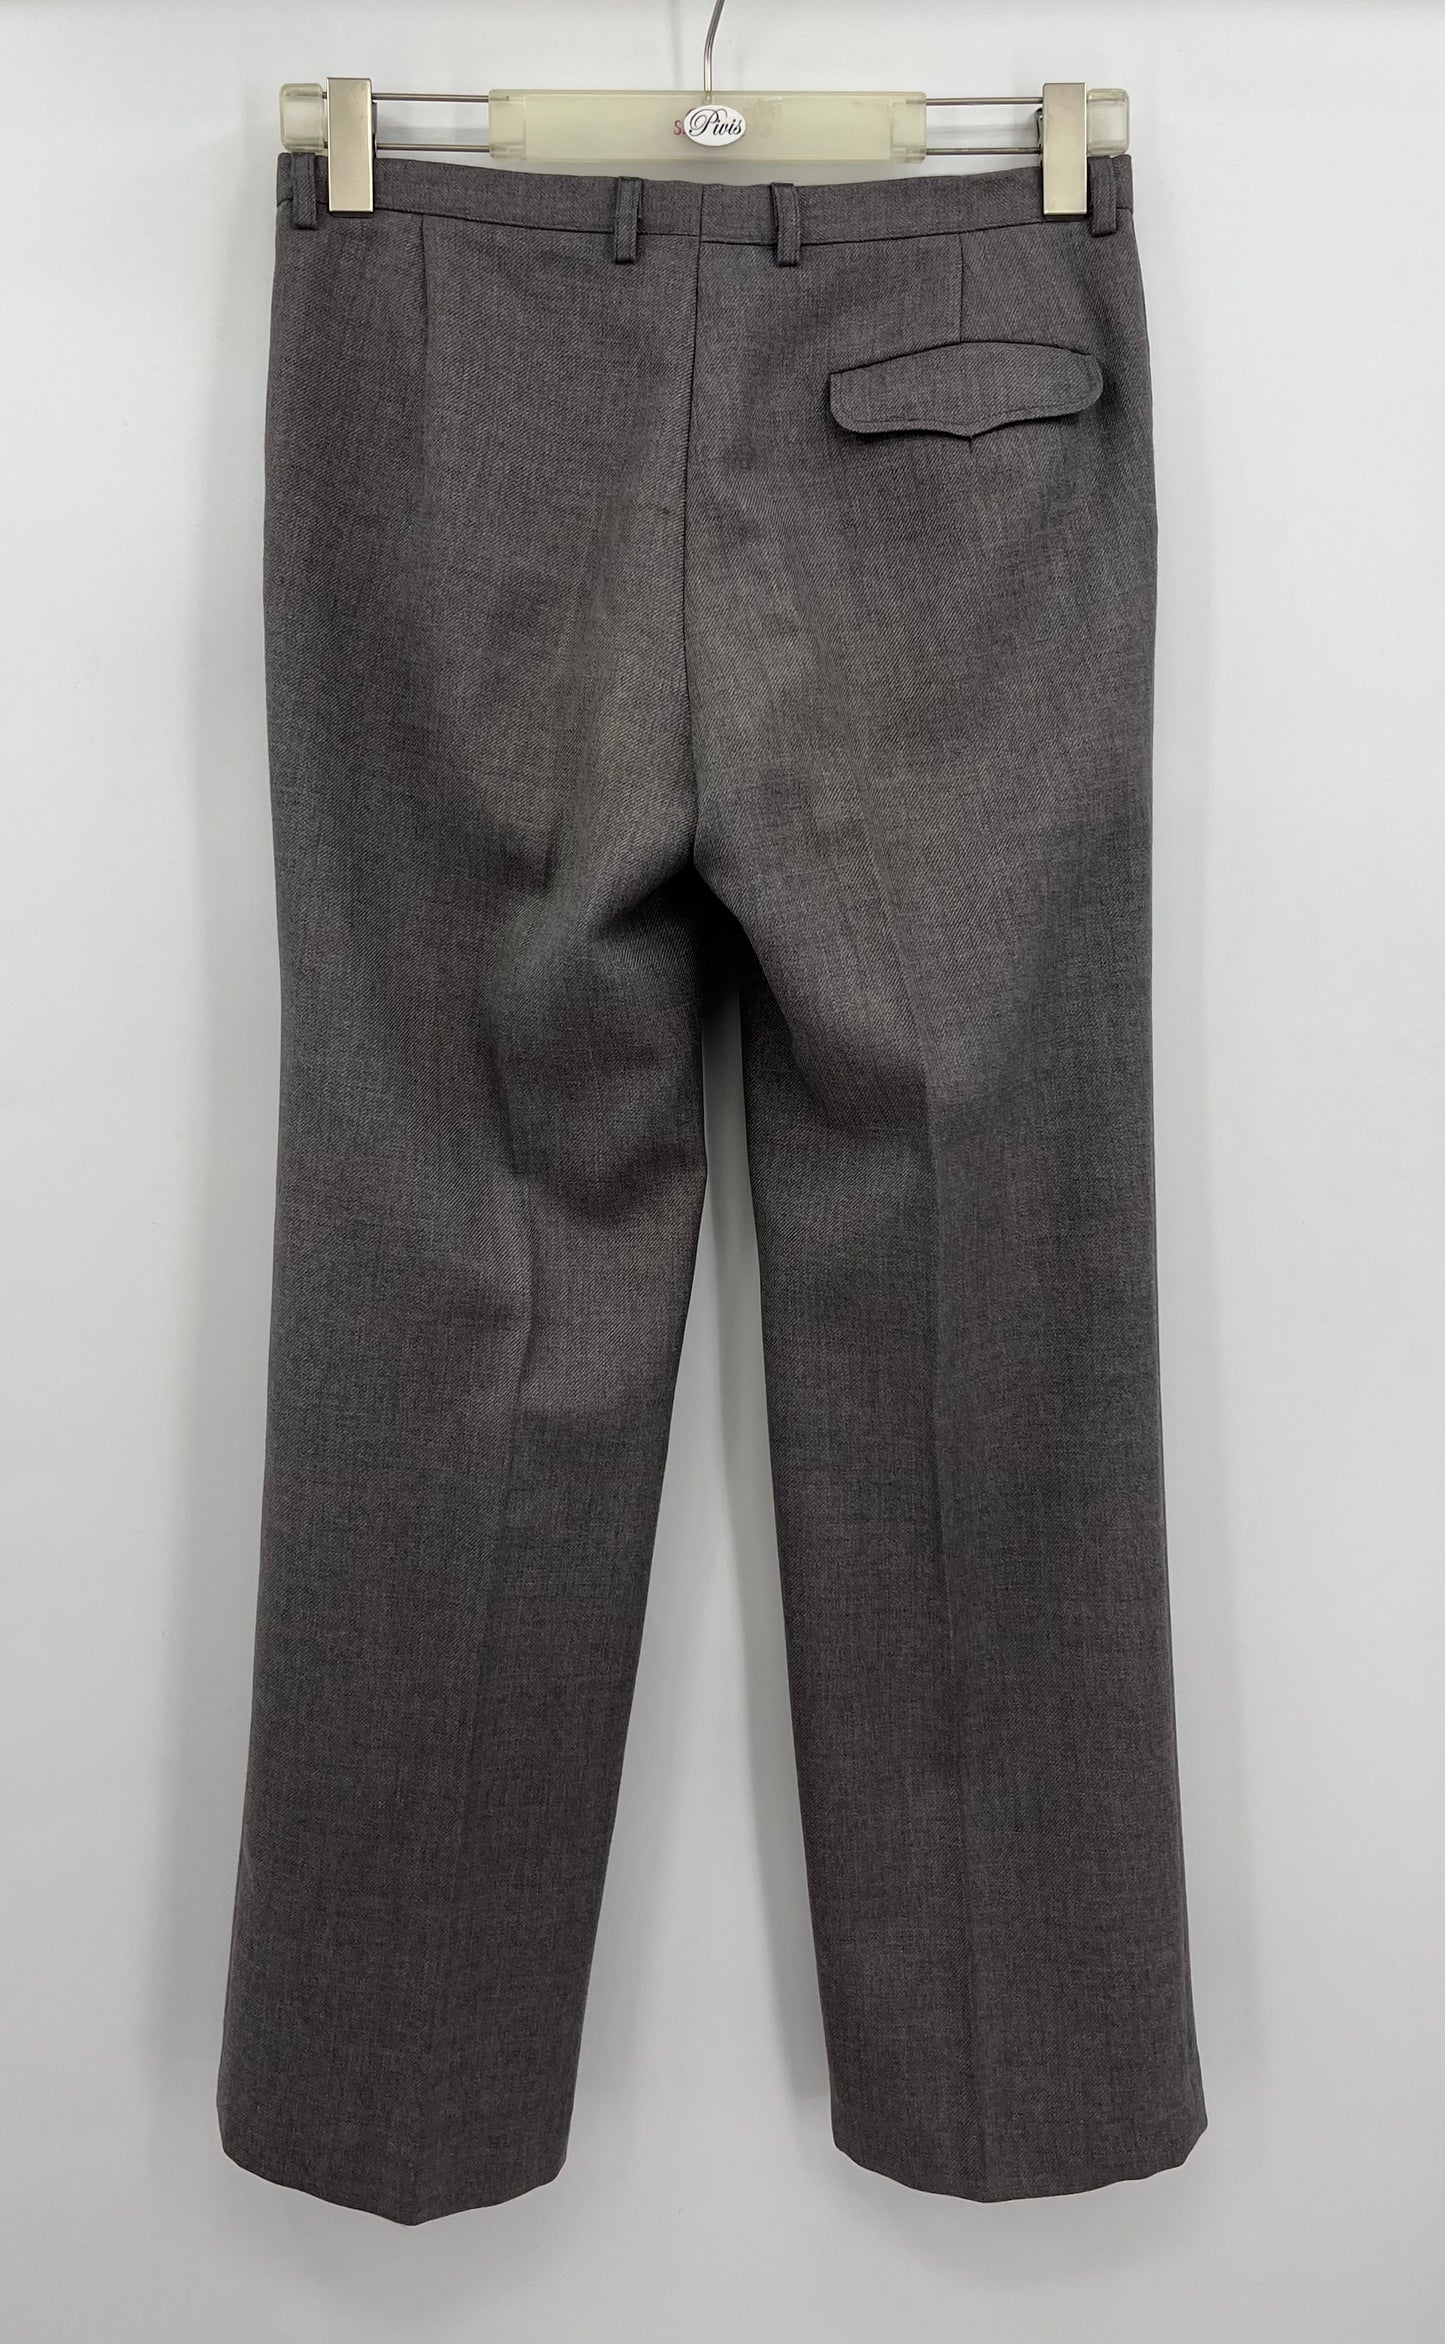 Luhta, harmaat miesten housut, 70-80-luku, vyöt.ymp. 84cm